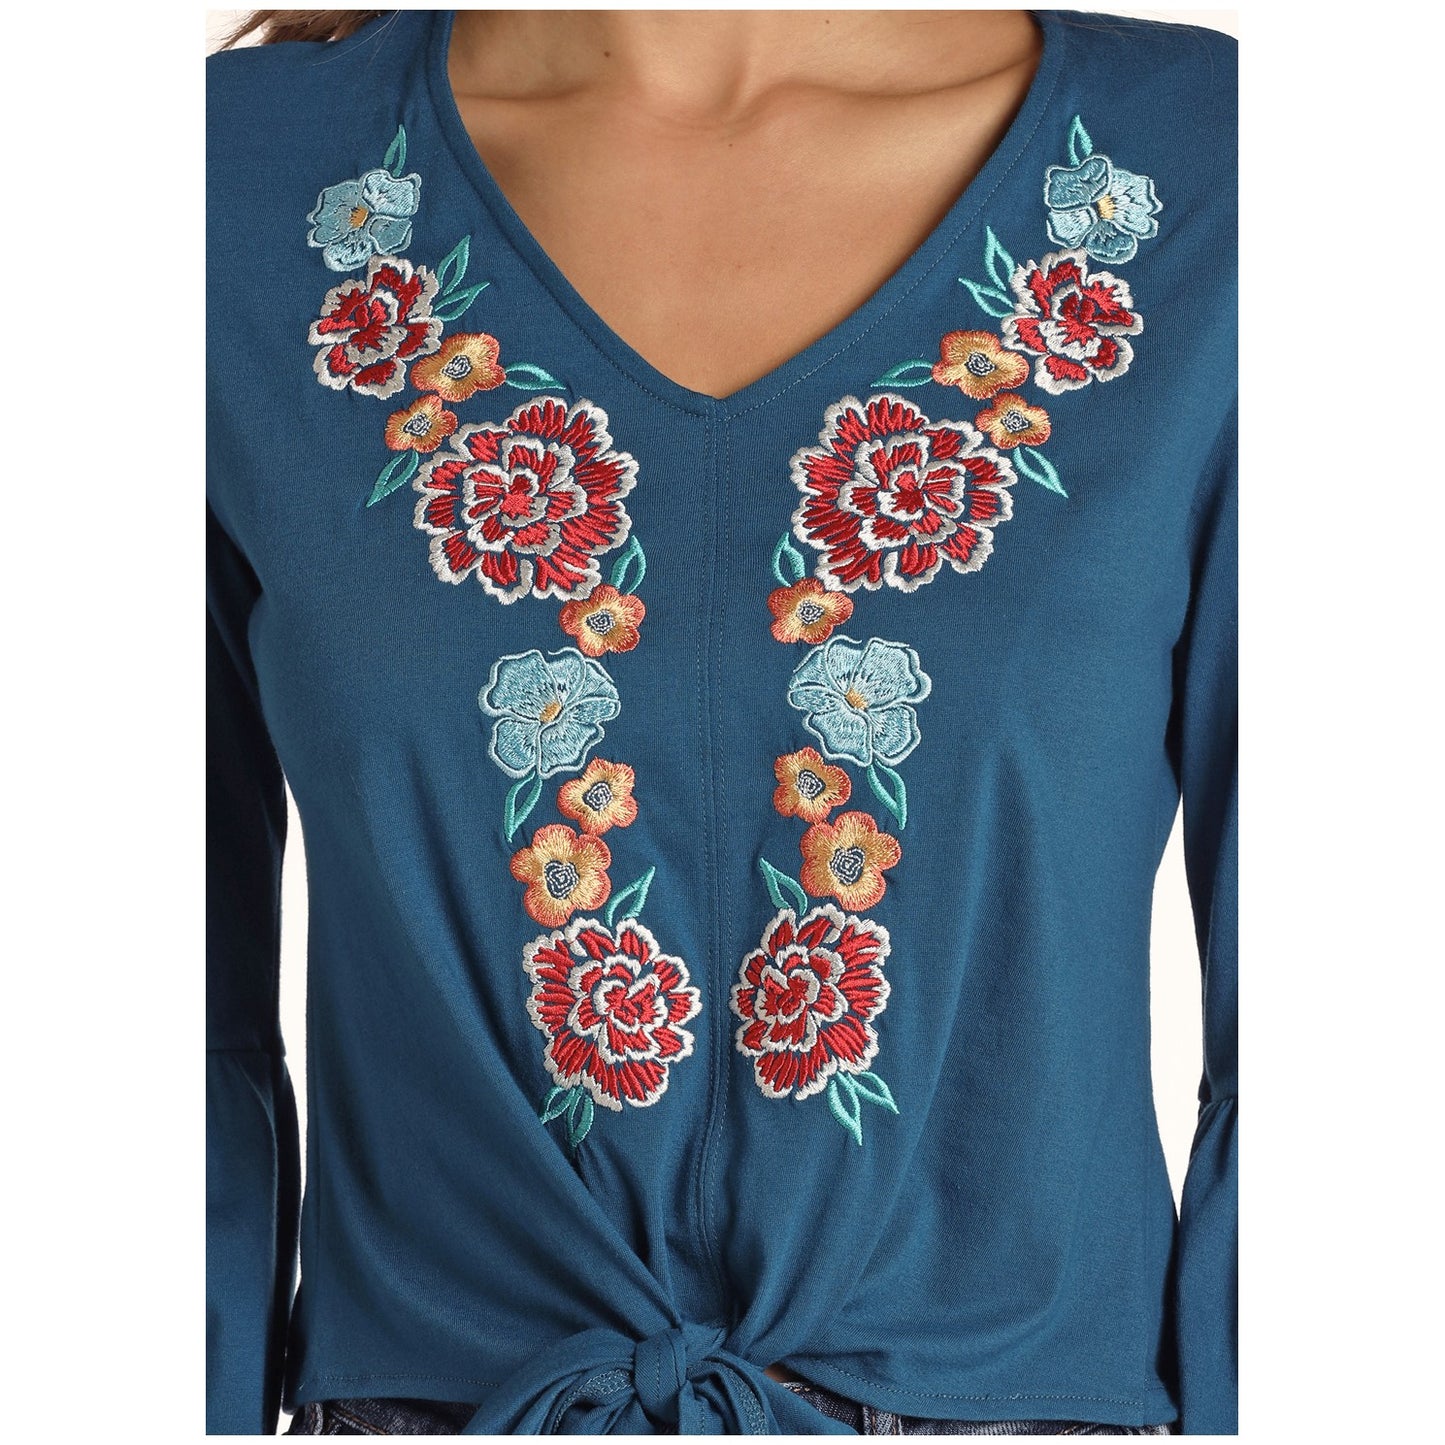 Panhandle Ladies Ladies Blue Floral Embroidered Shirt 48T8427-45